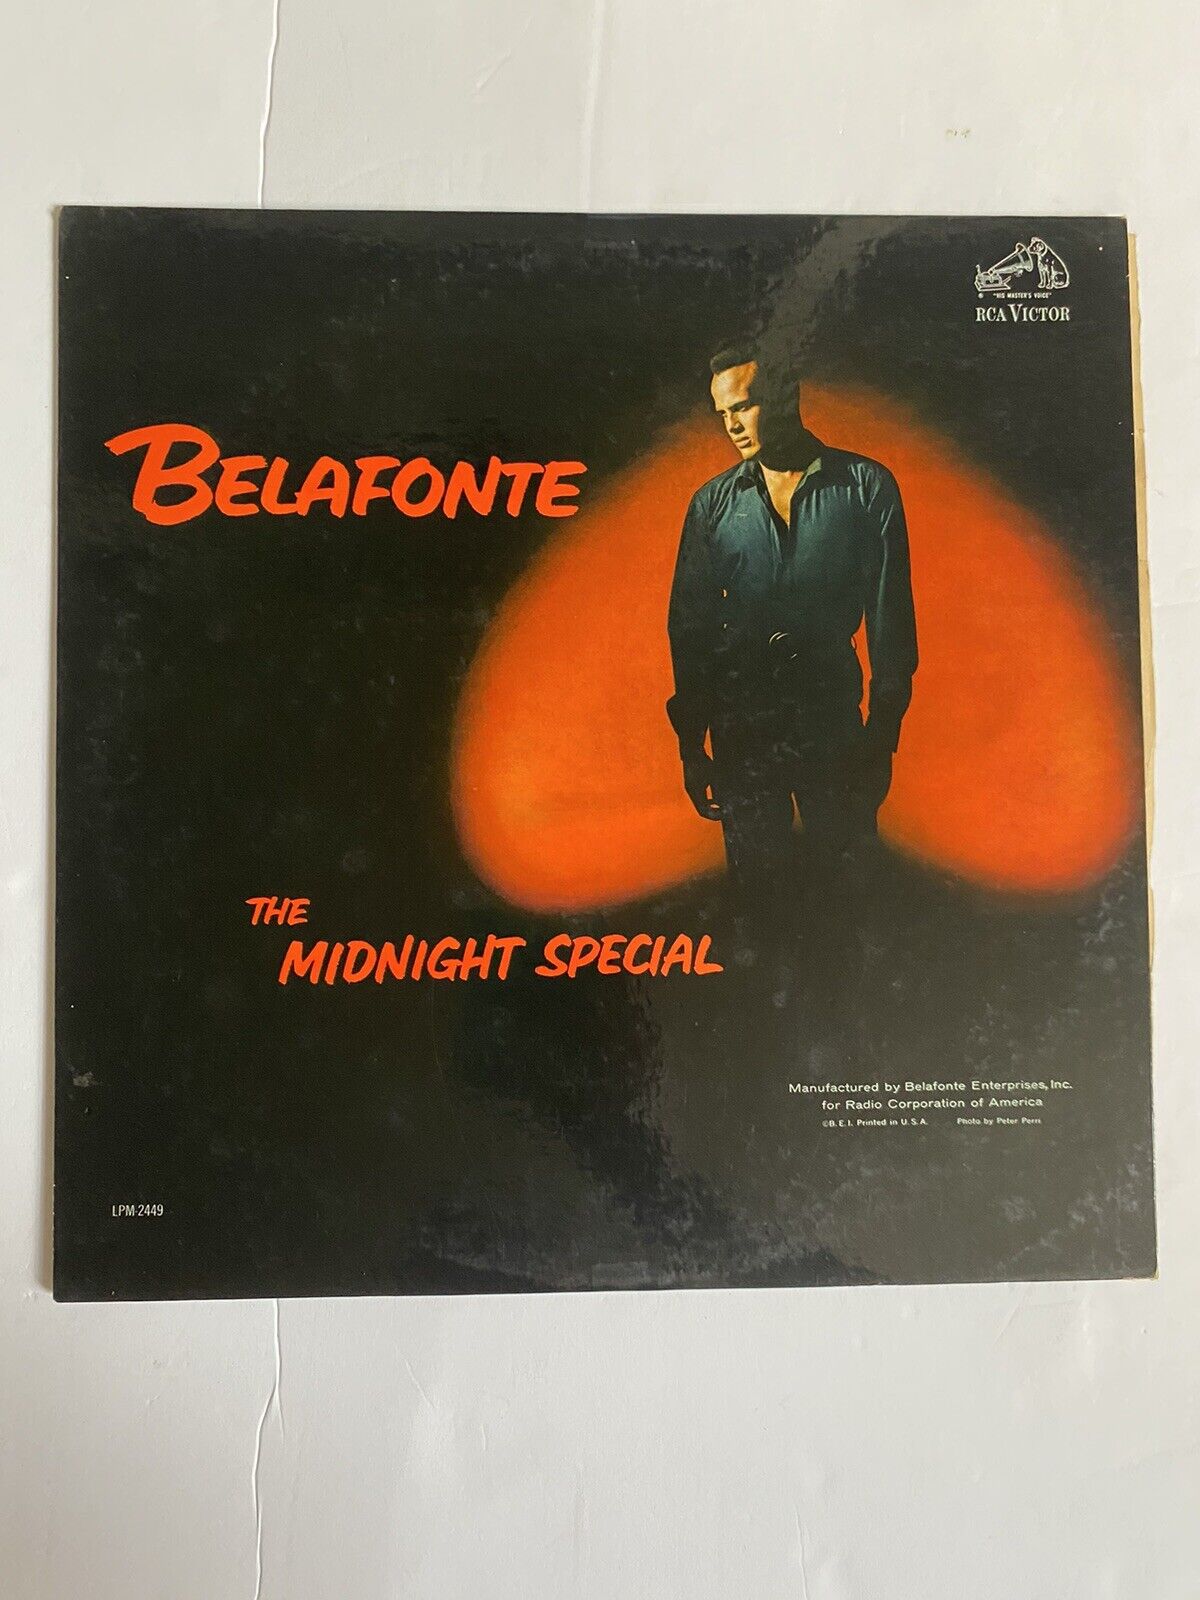 Harry Belafonte - The Midnight Special - RCA Victor Records Vintage Vinyl Record